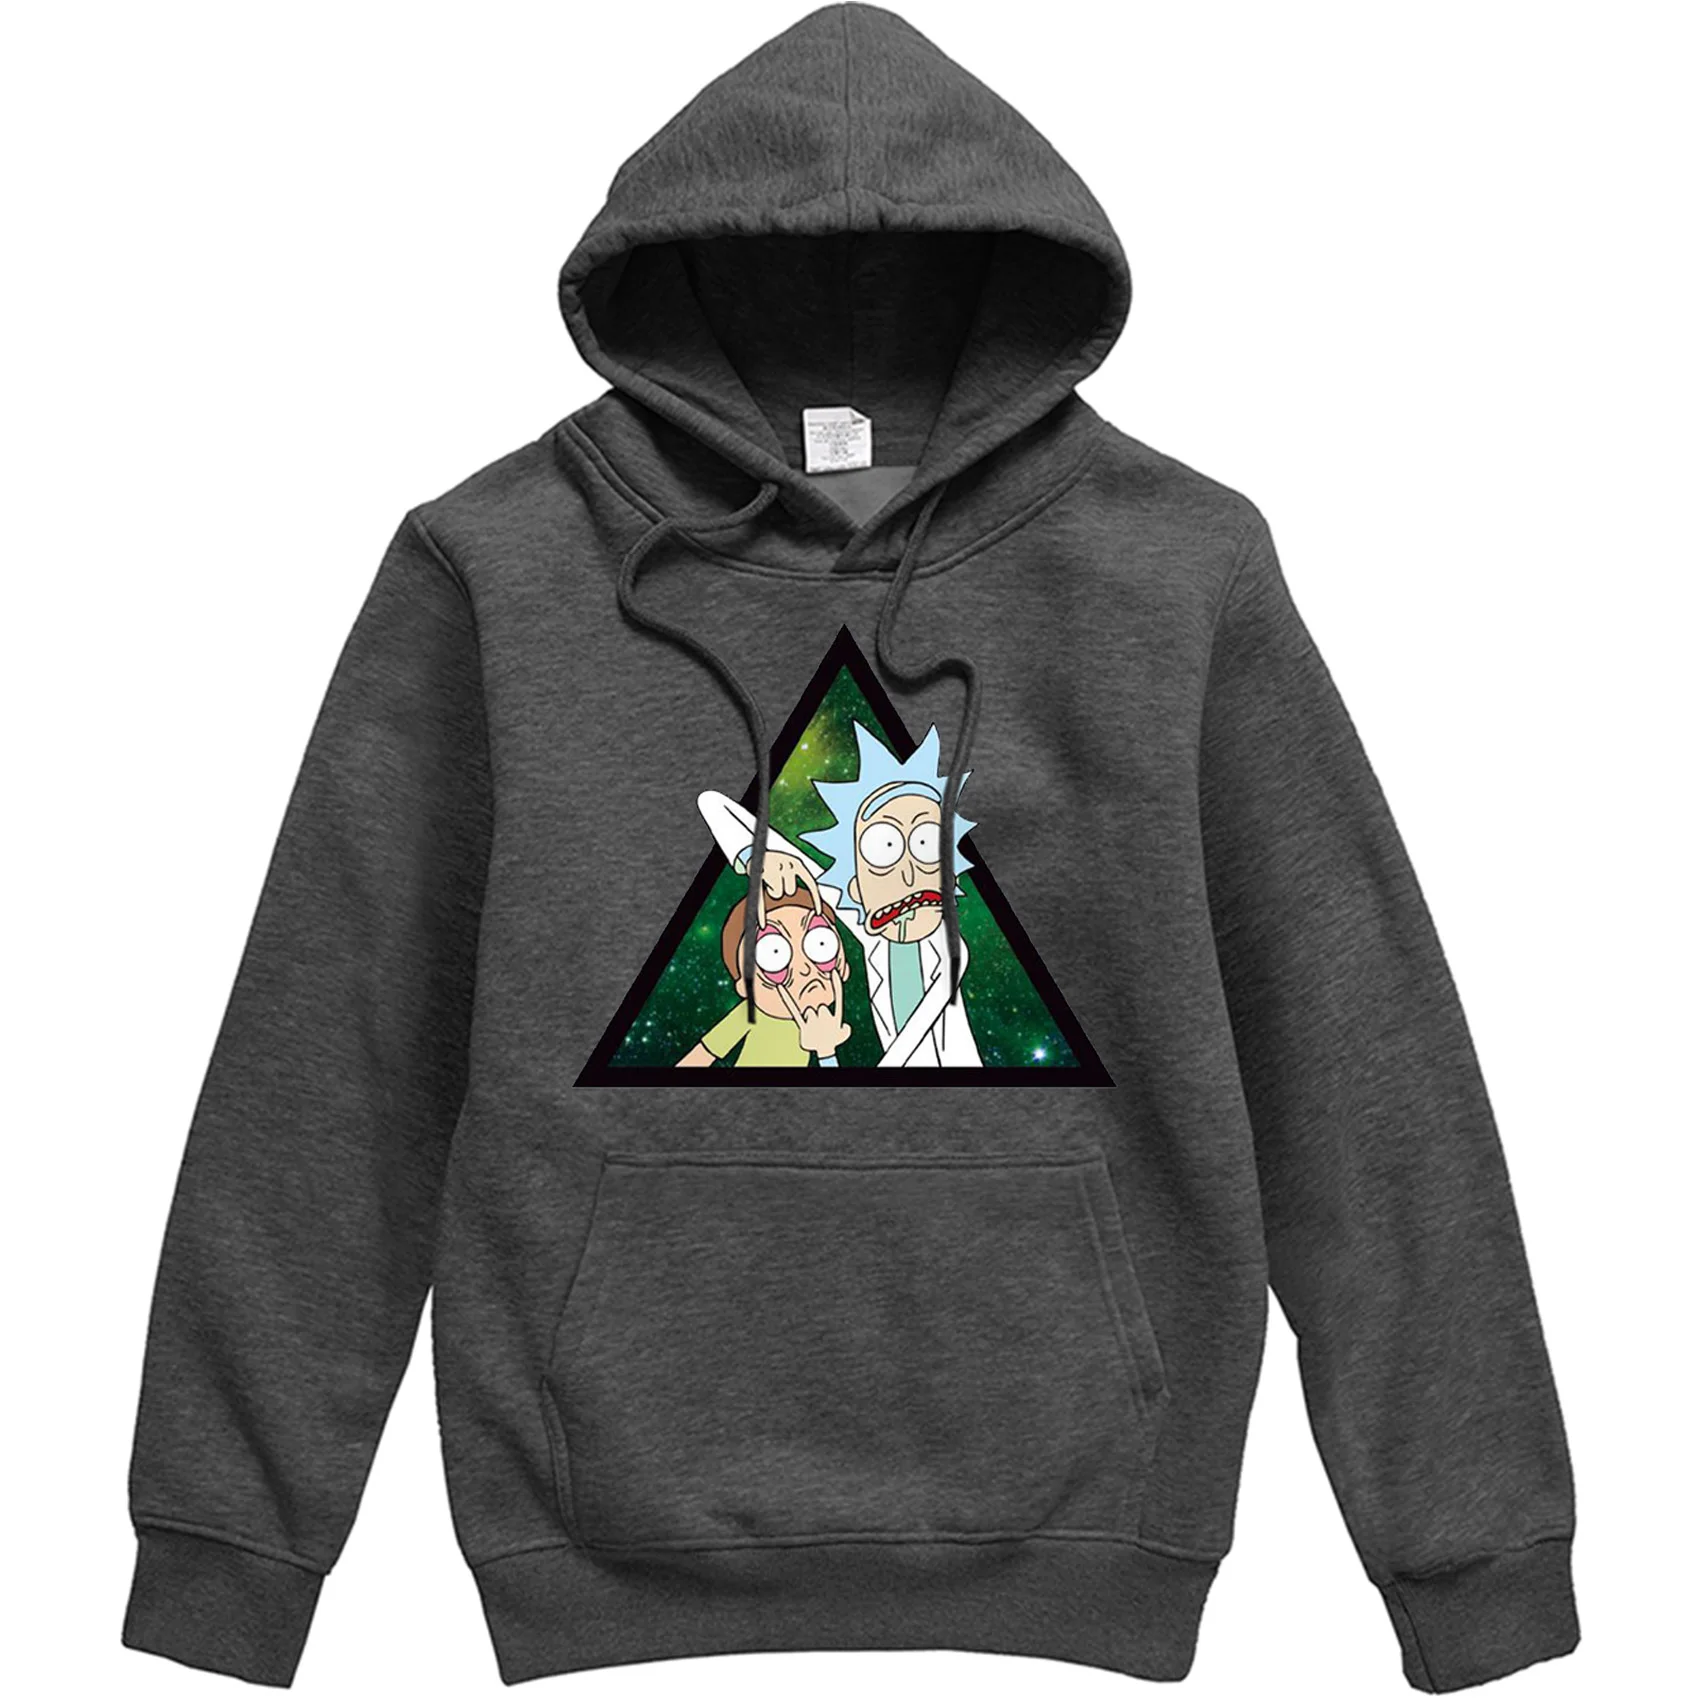 Rick And Morty Men Hoodies 2019 Autumn Fleece Pullover Casual Harajuku Streetwear Hooded Sweatshirts Hip Hop 4